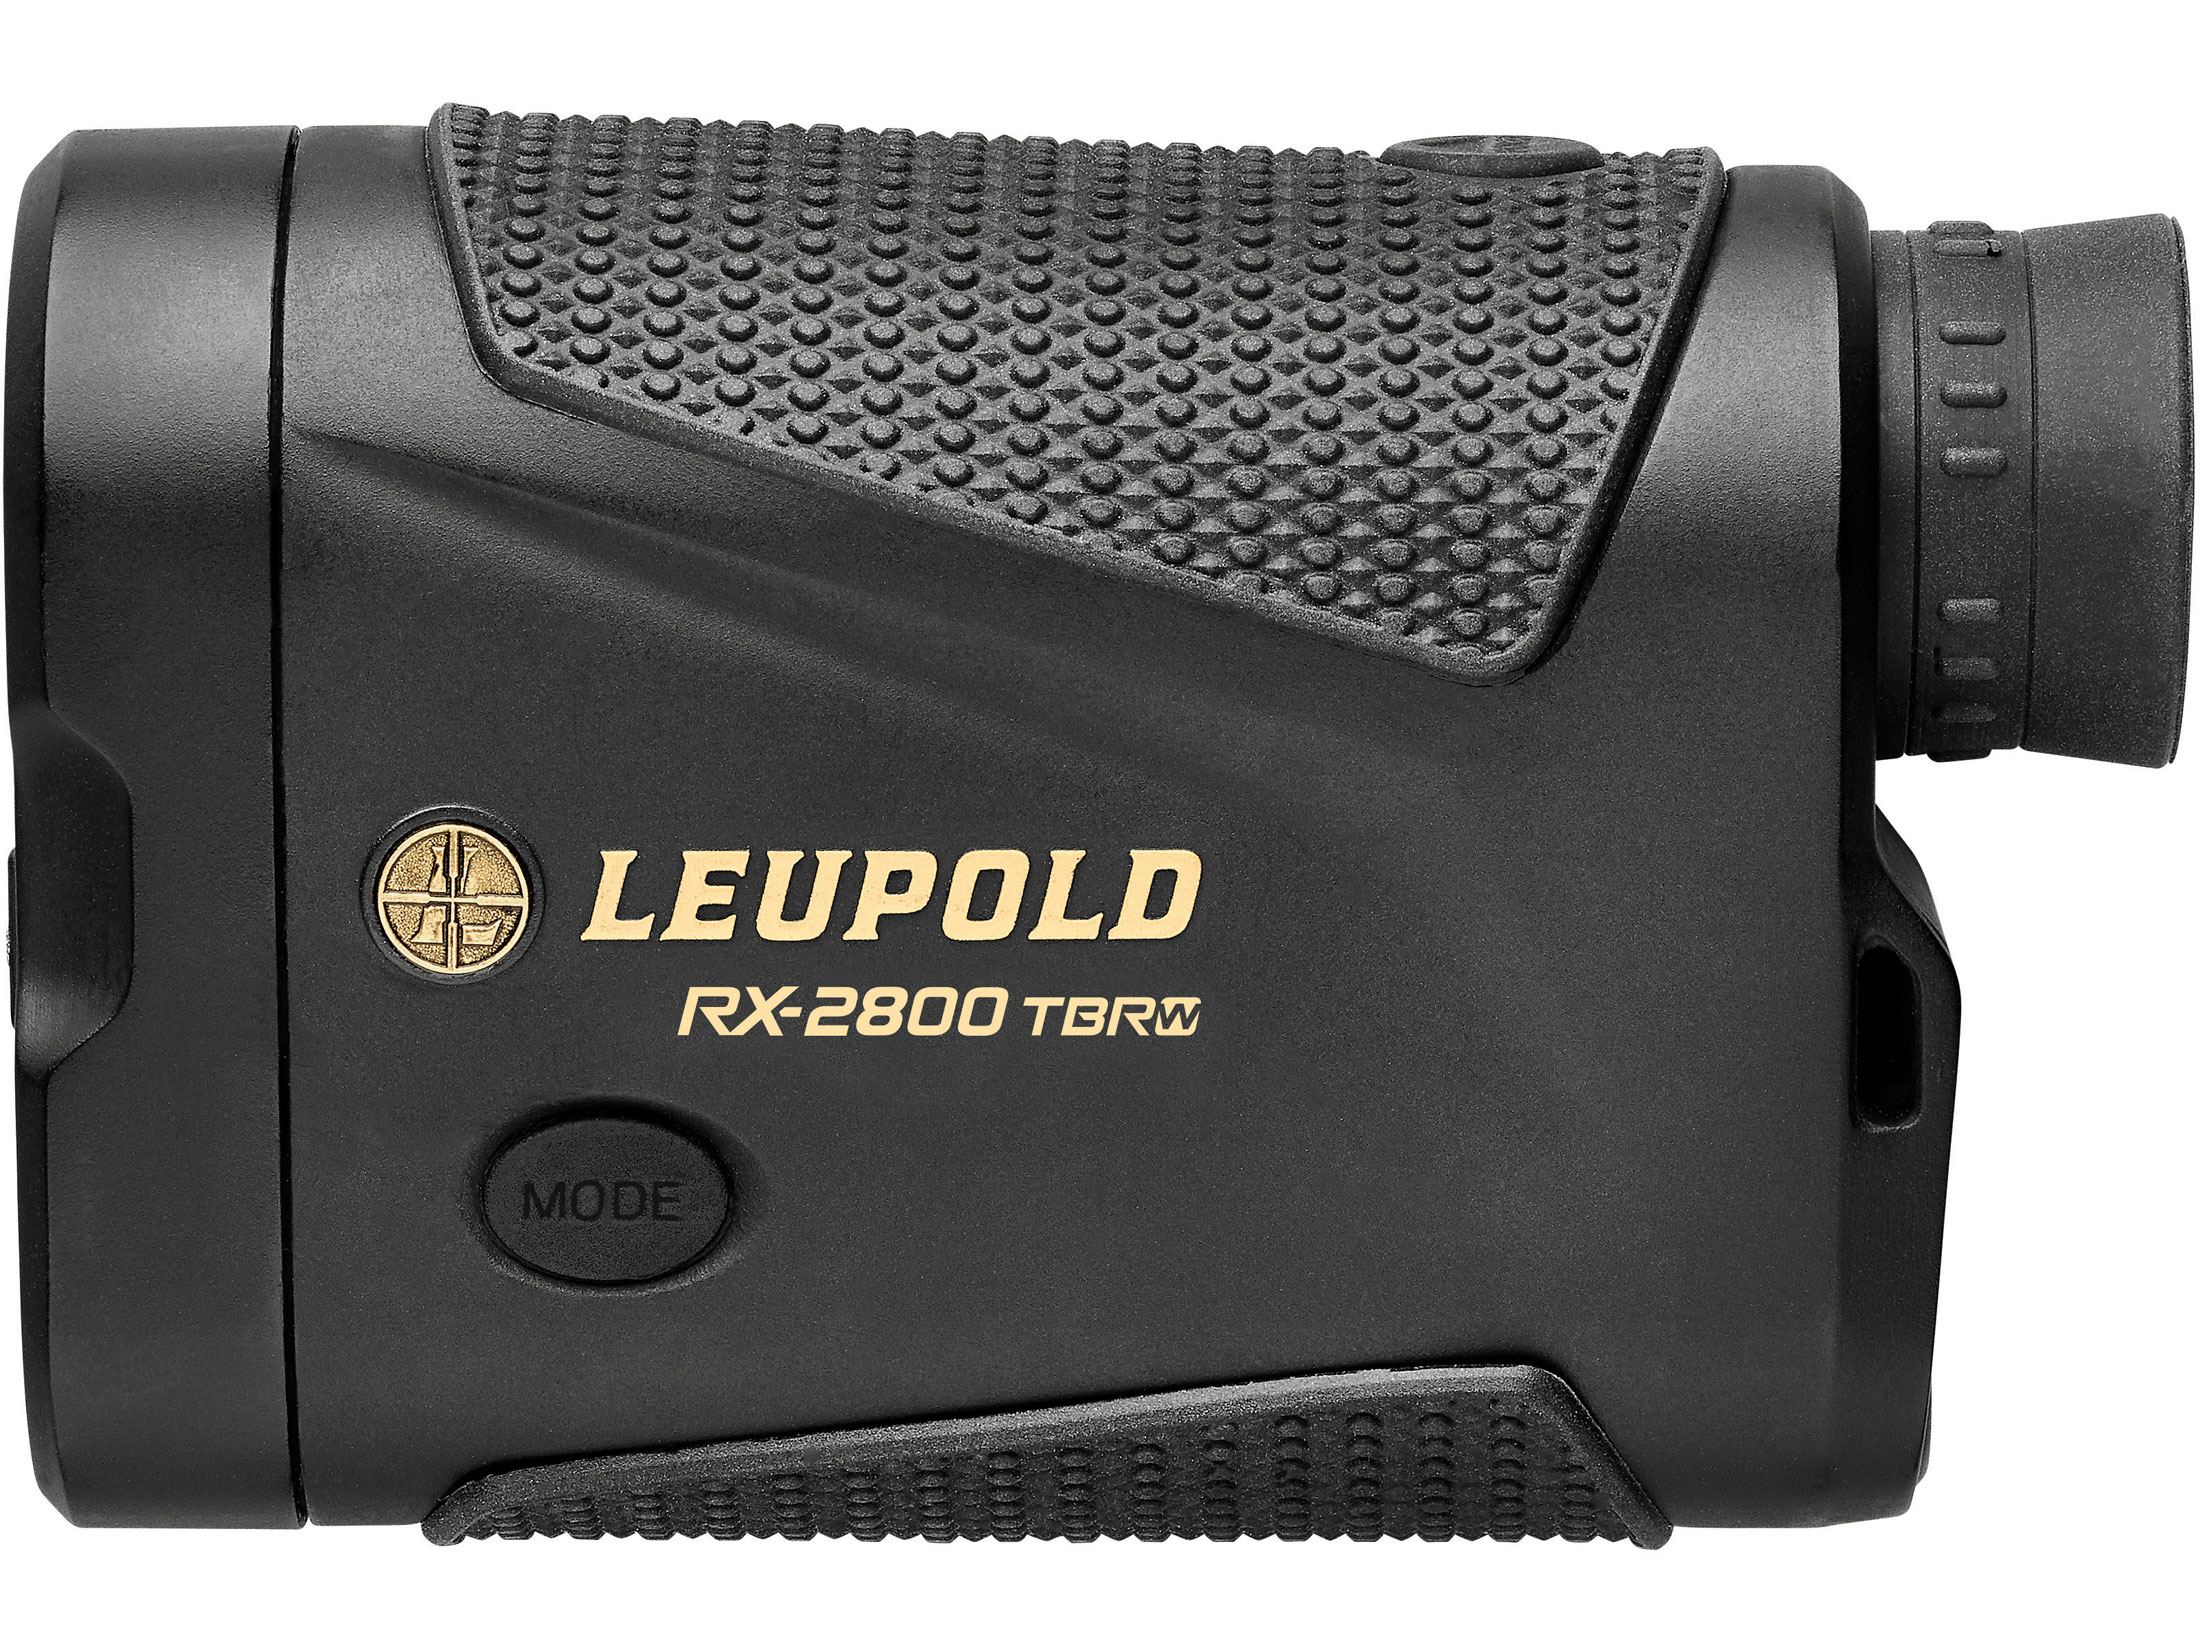 New Leupold RX 2800 TBR Laser Rangefinder LP171910 Dimensions 4.4" x 2.9" x 1.5